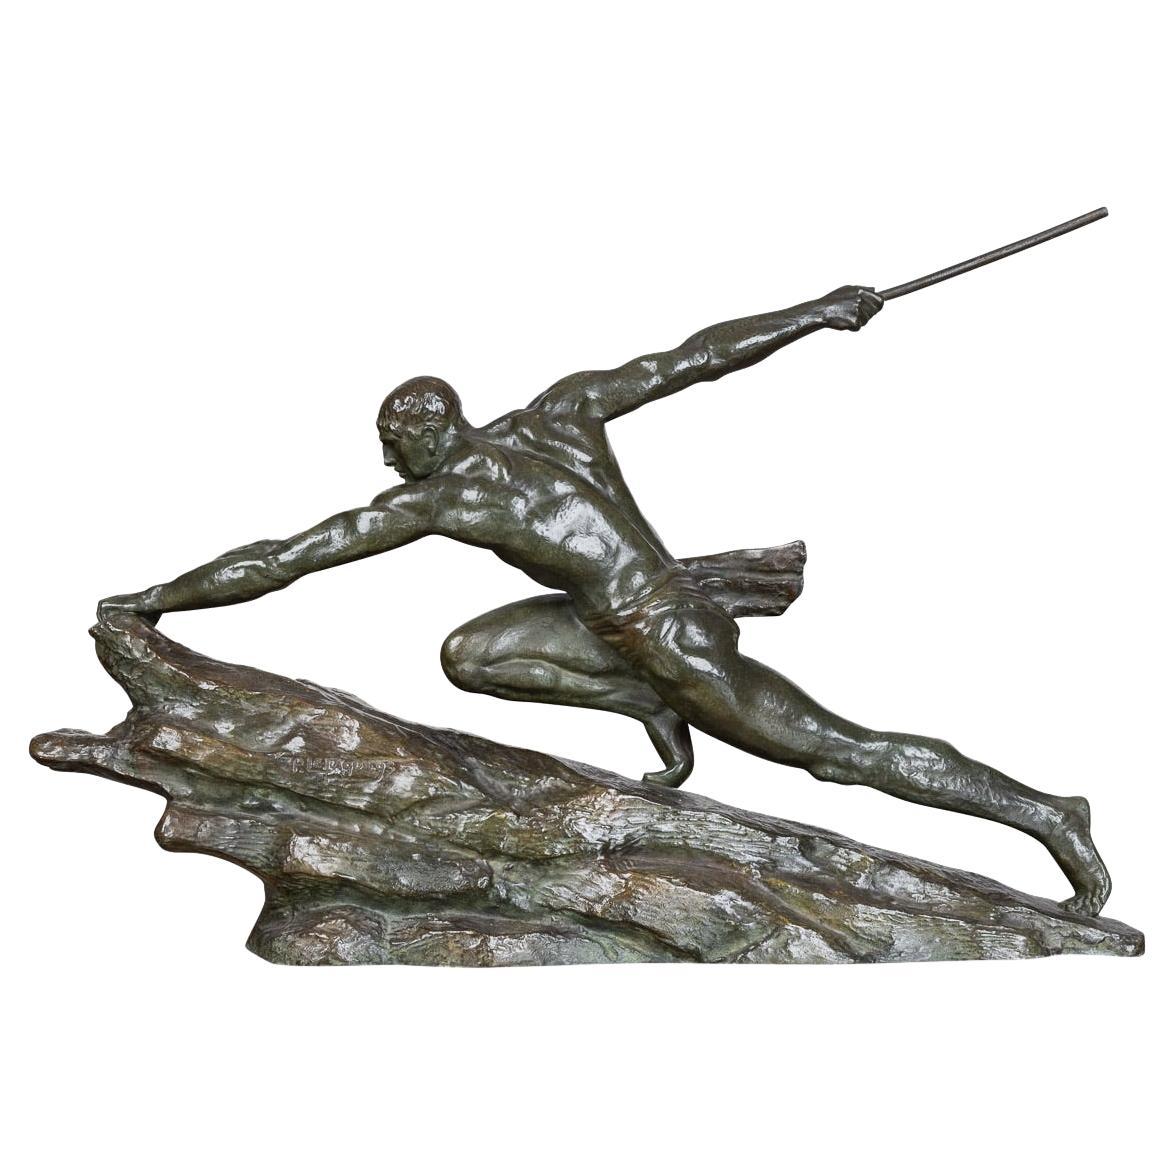 Französische Art-Déco-Jägerfigur aus Bronze des 20. Jahrhunderts, Pierre Le Faguays, um 1930